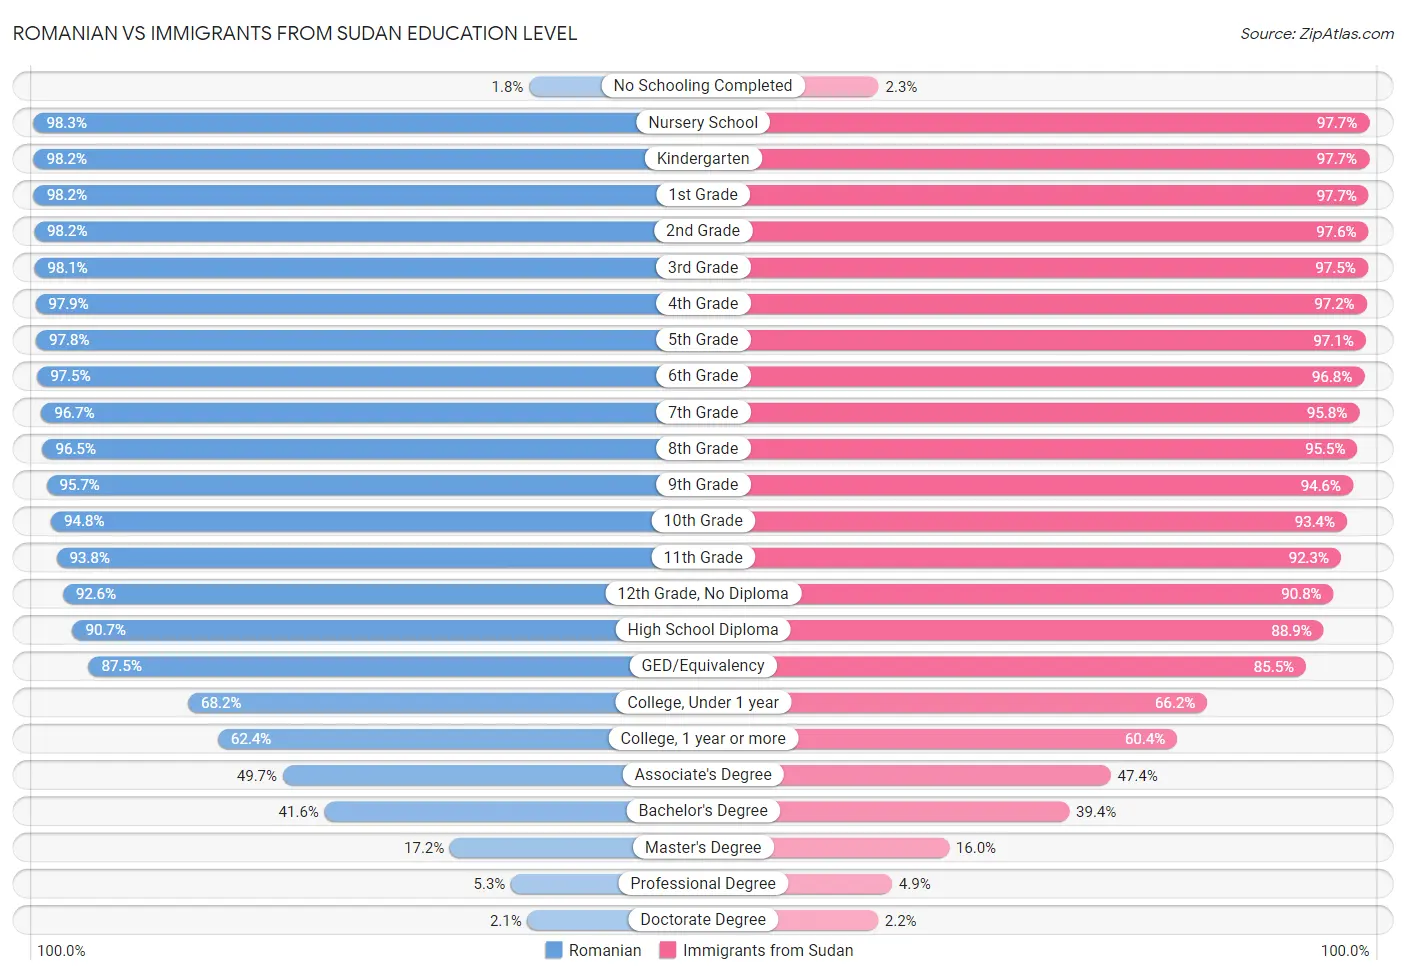 Romanian vs Immigrants from Sudan Education Level